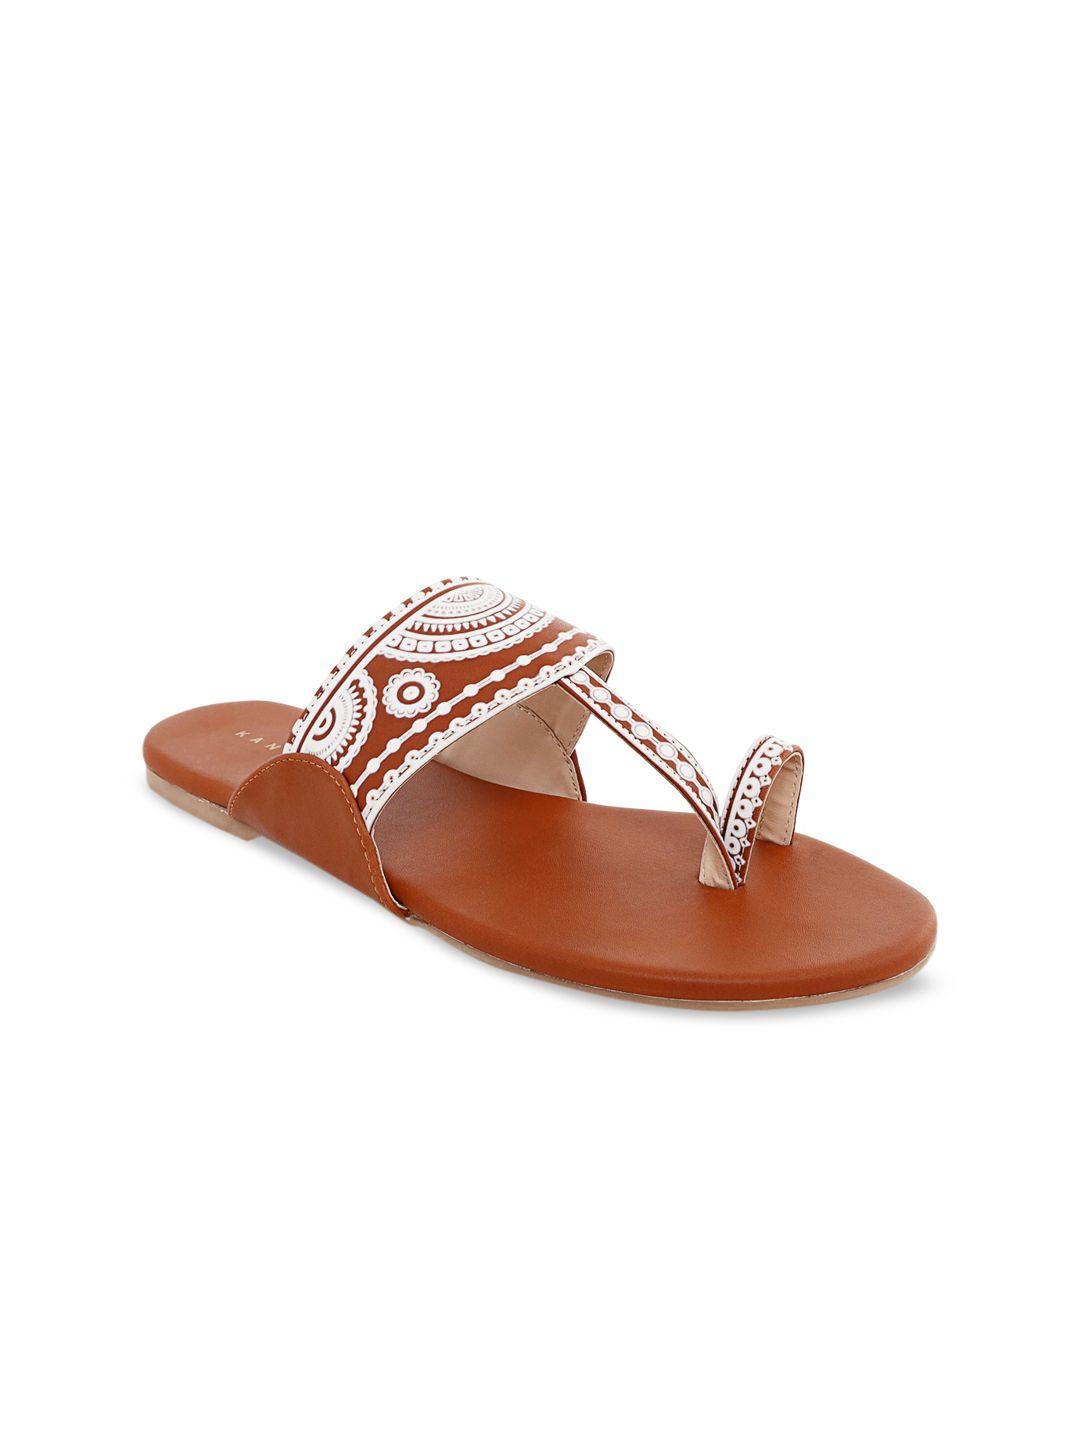 kanvas women tan printed leather ethnic one toe flats